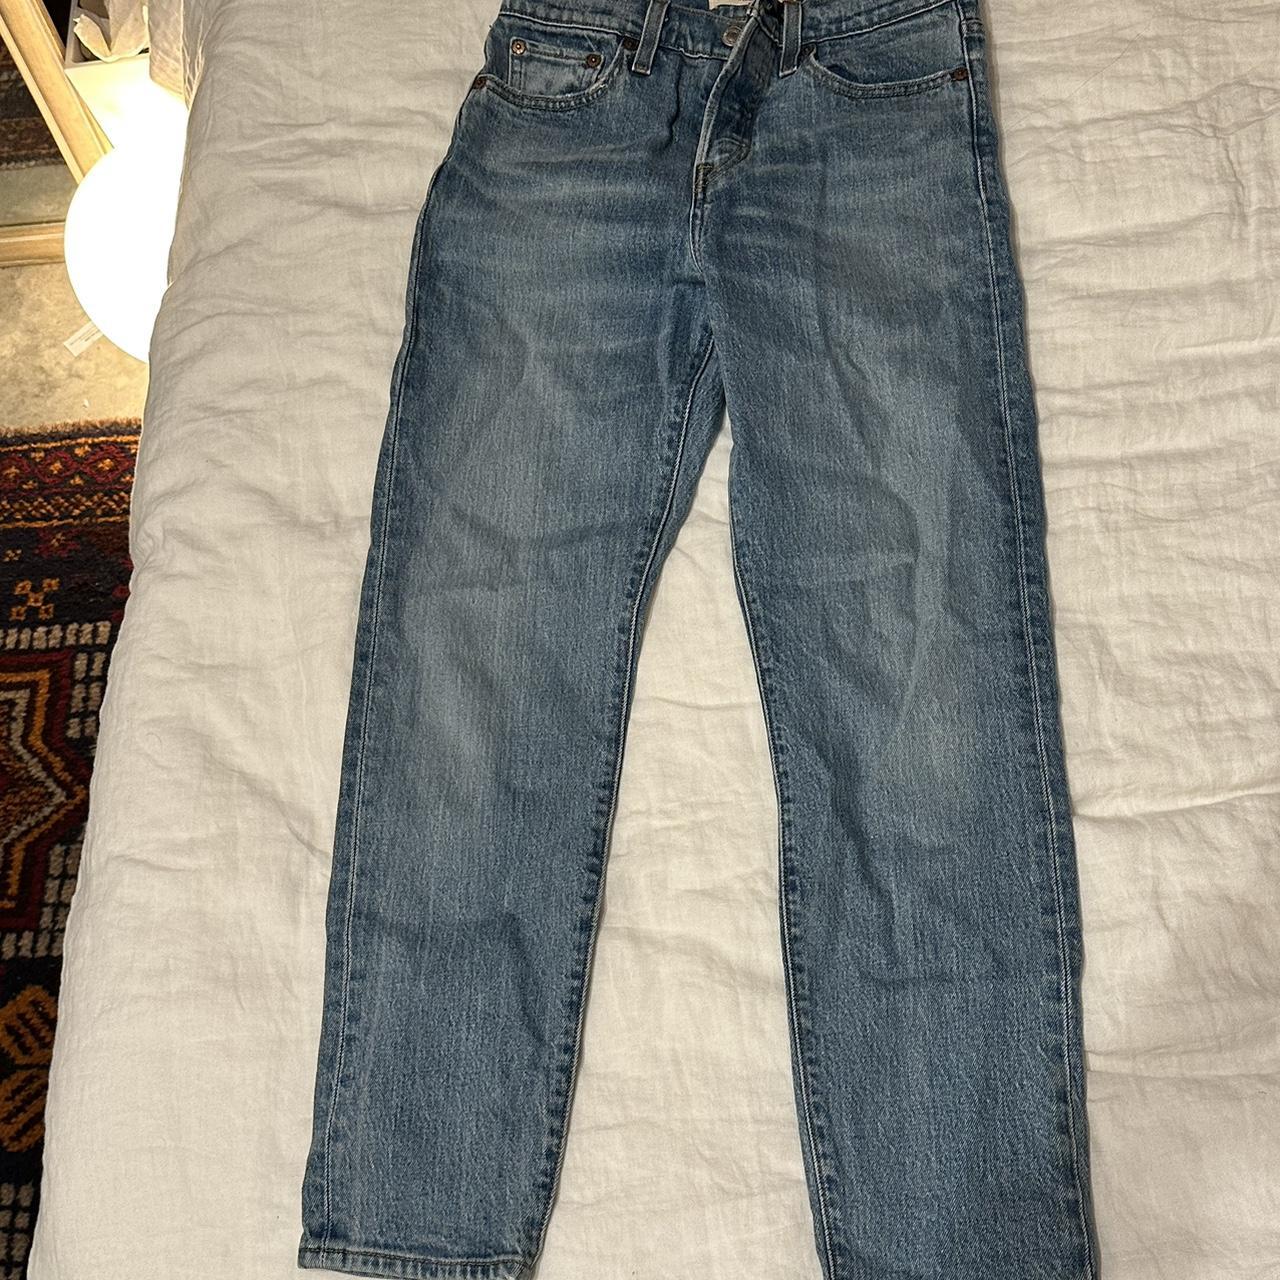 Levis Wedgie style jeans. Medium blue color, style... - Depop